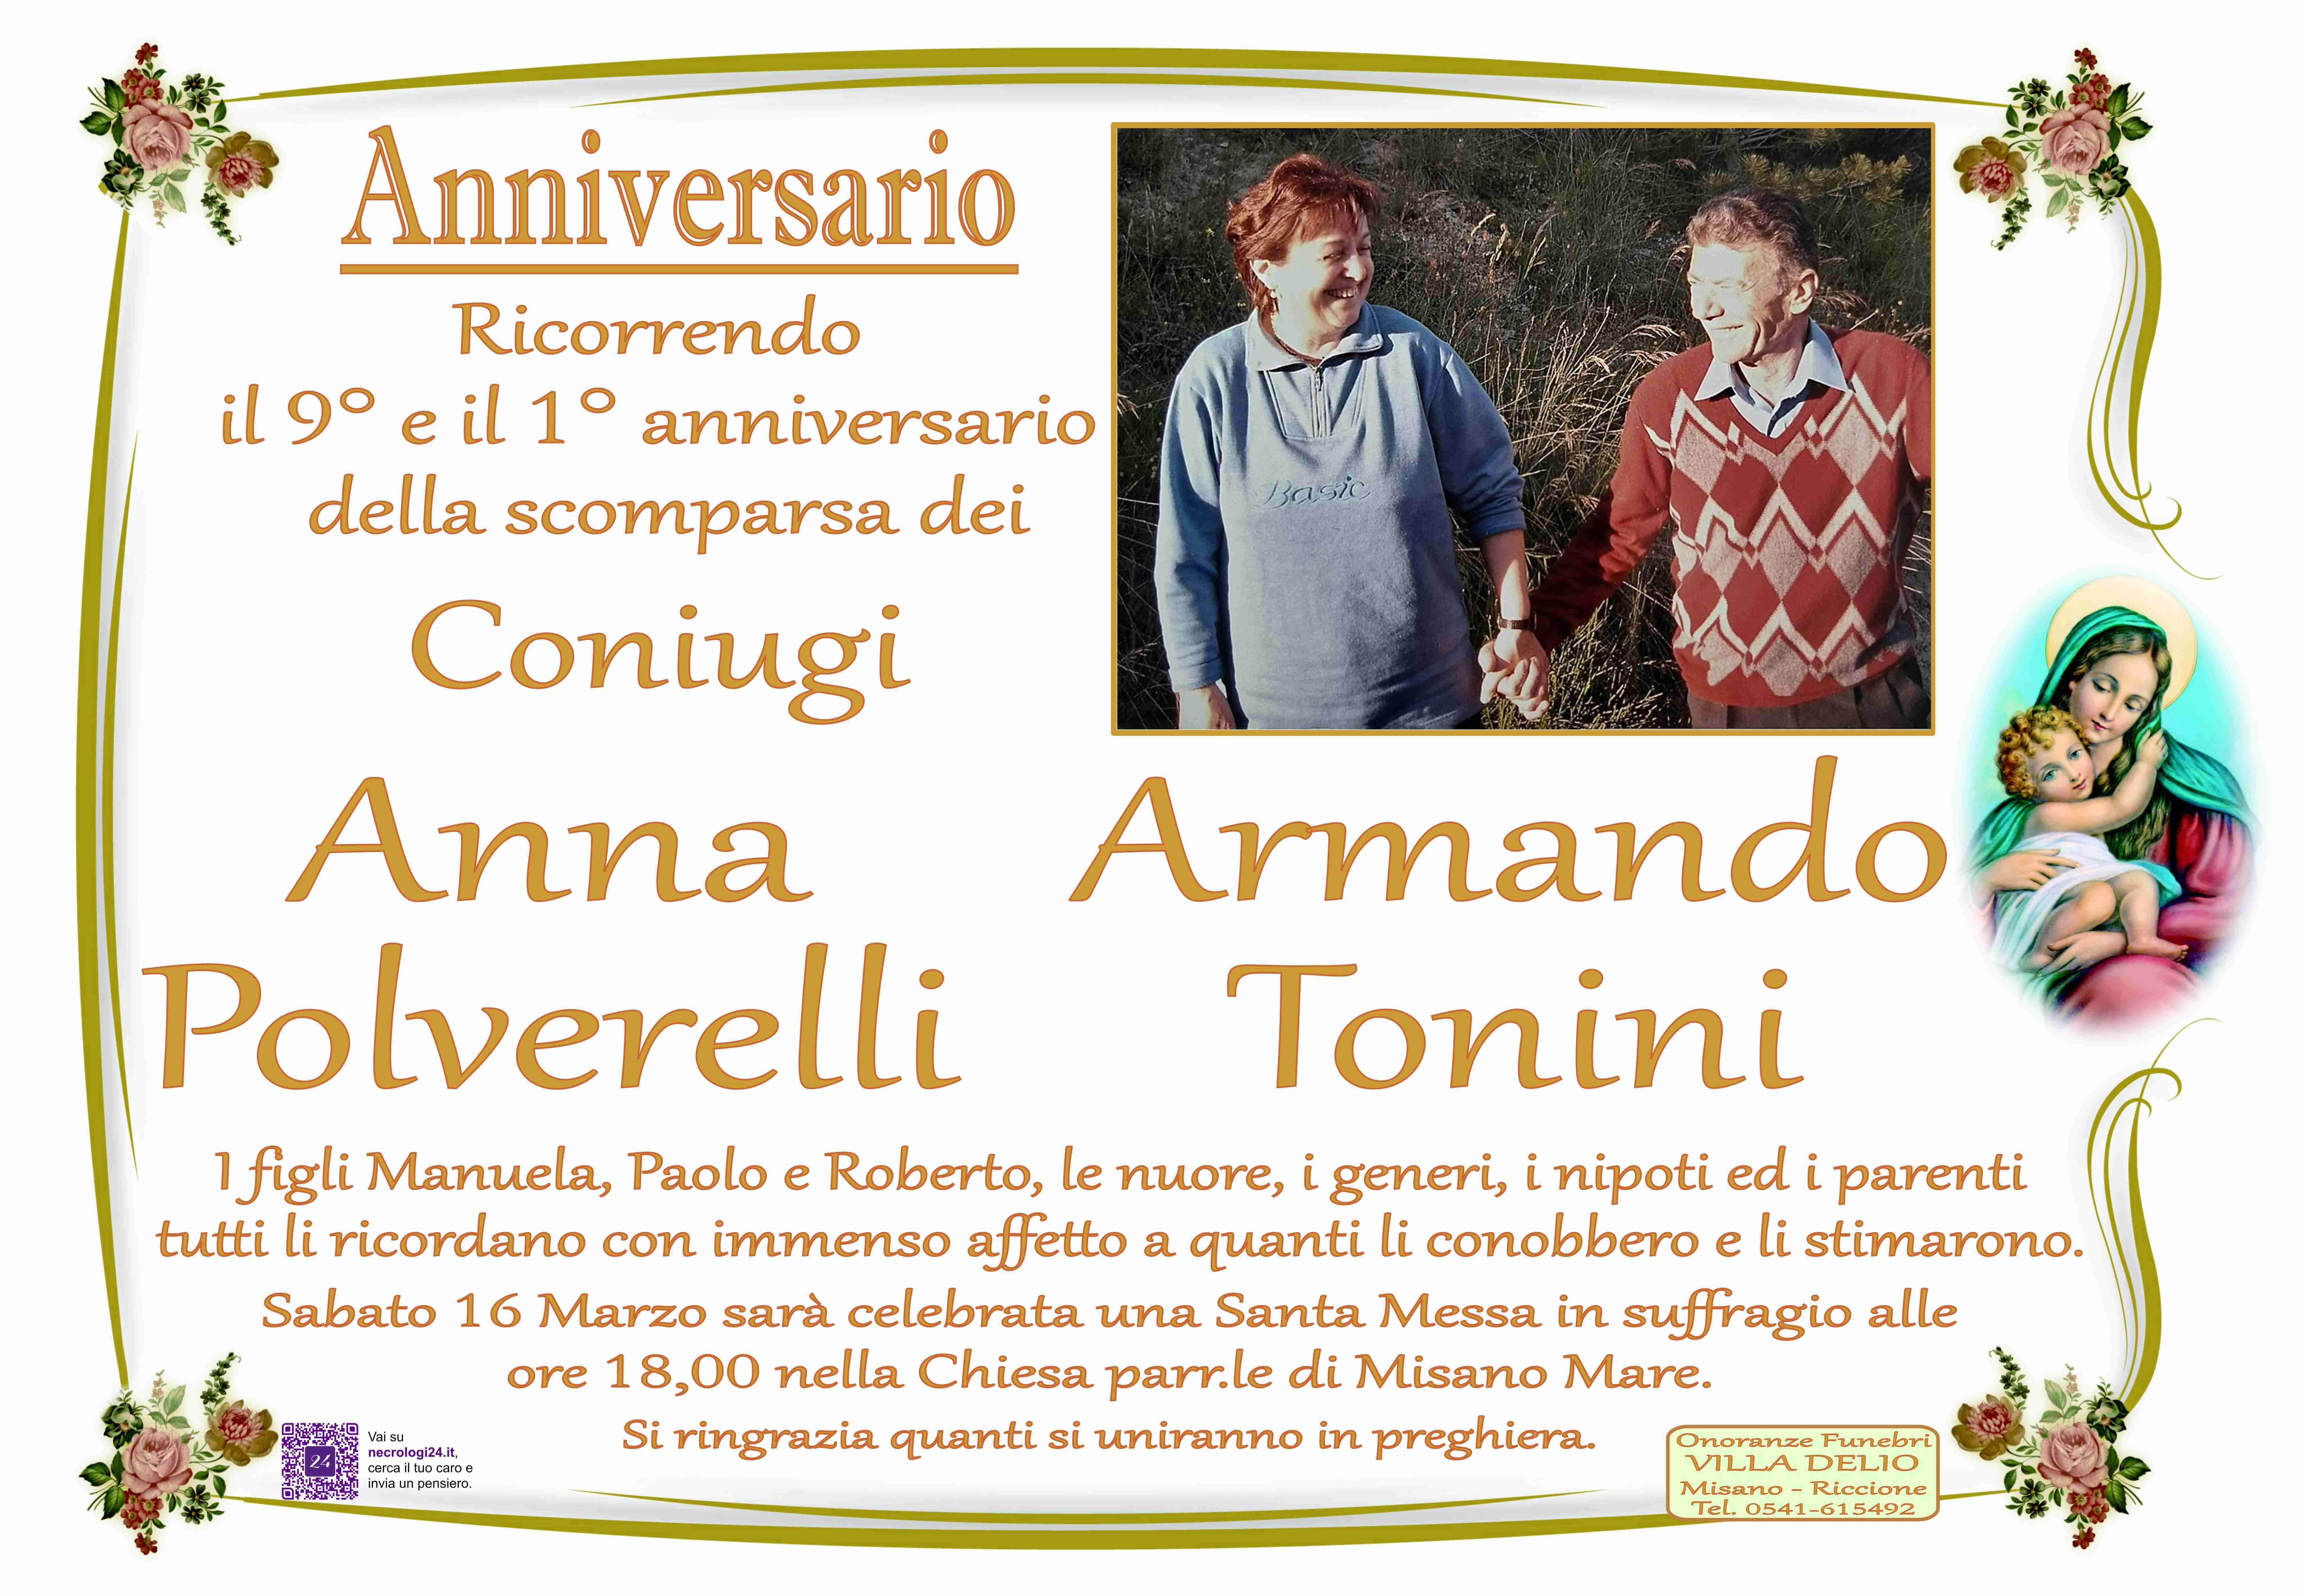 Anna Polverelli e Armando Tonini